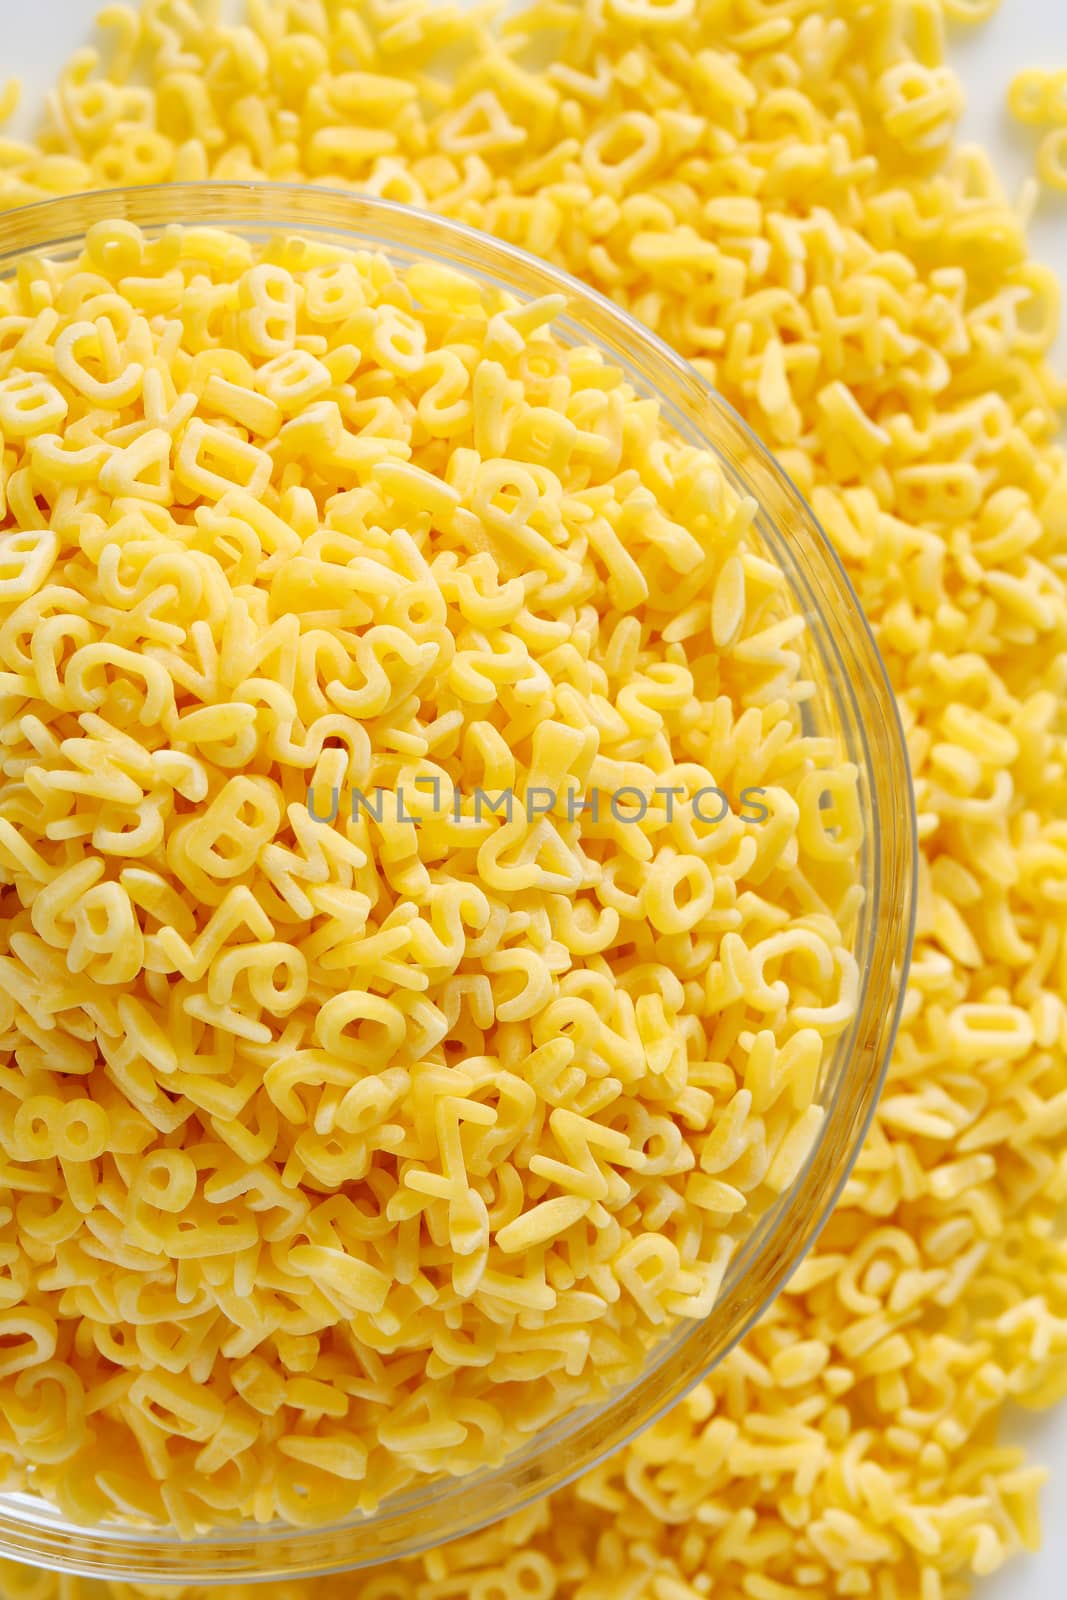 Dried alphabet pasta by Digifoodstock